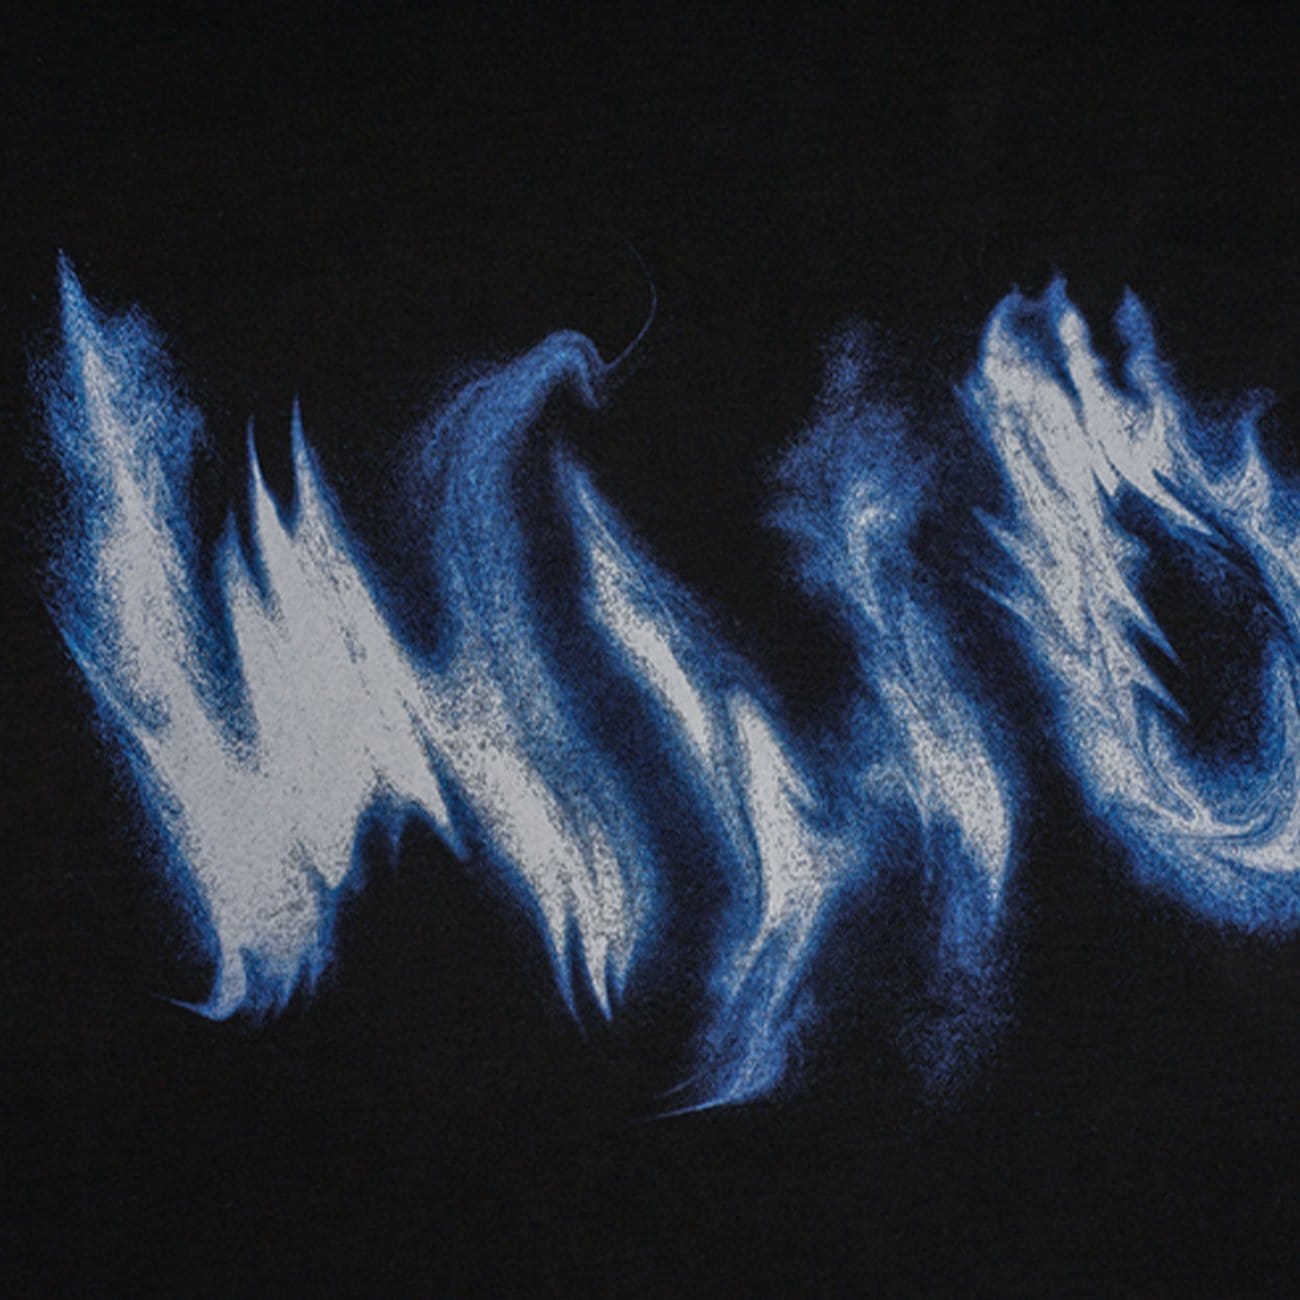 Dark Blue Fire Flame Print T-Shirt